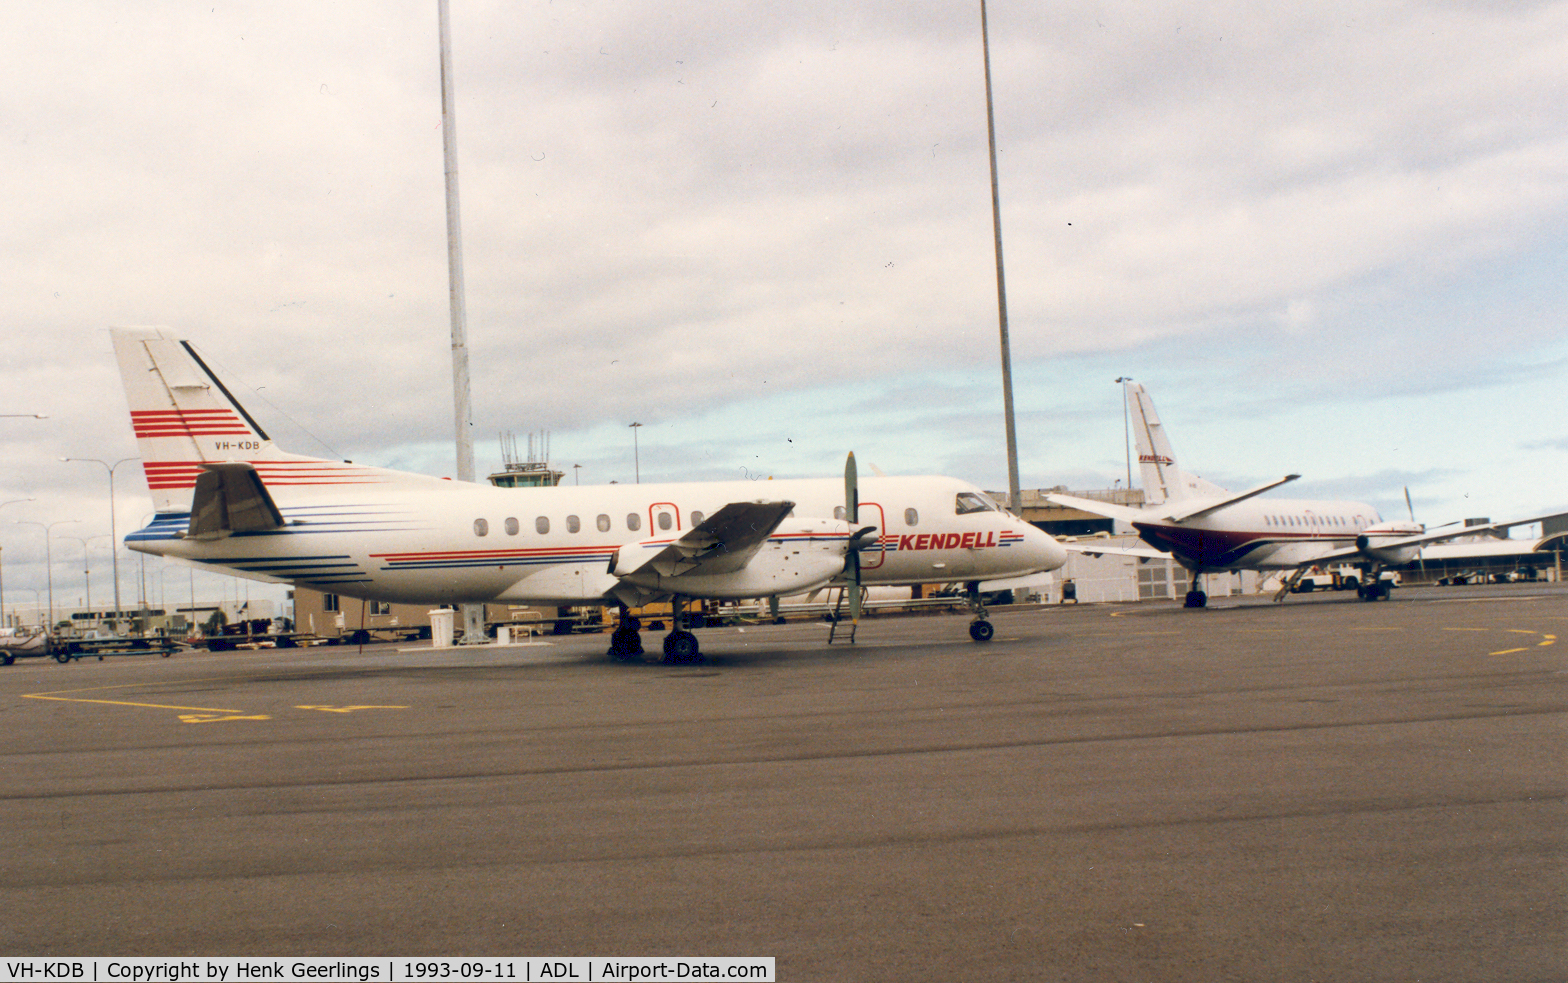 VH-KDB, 1984 Saab-Fairchild SF340 C/N 340A-008, Kendell Airlines. Ex PH-KJK of Netherlines